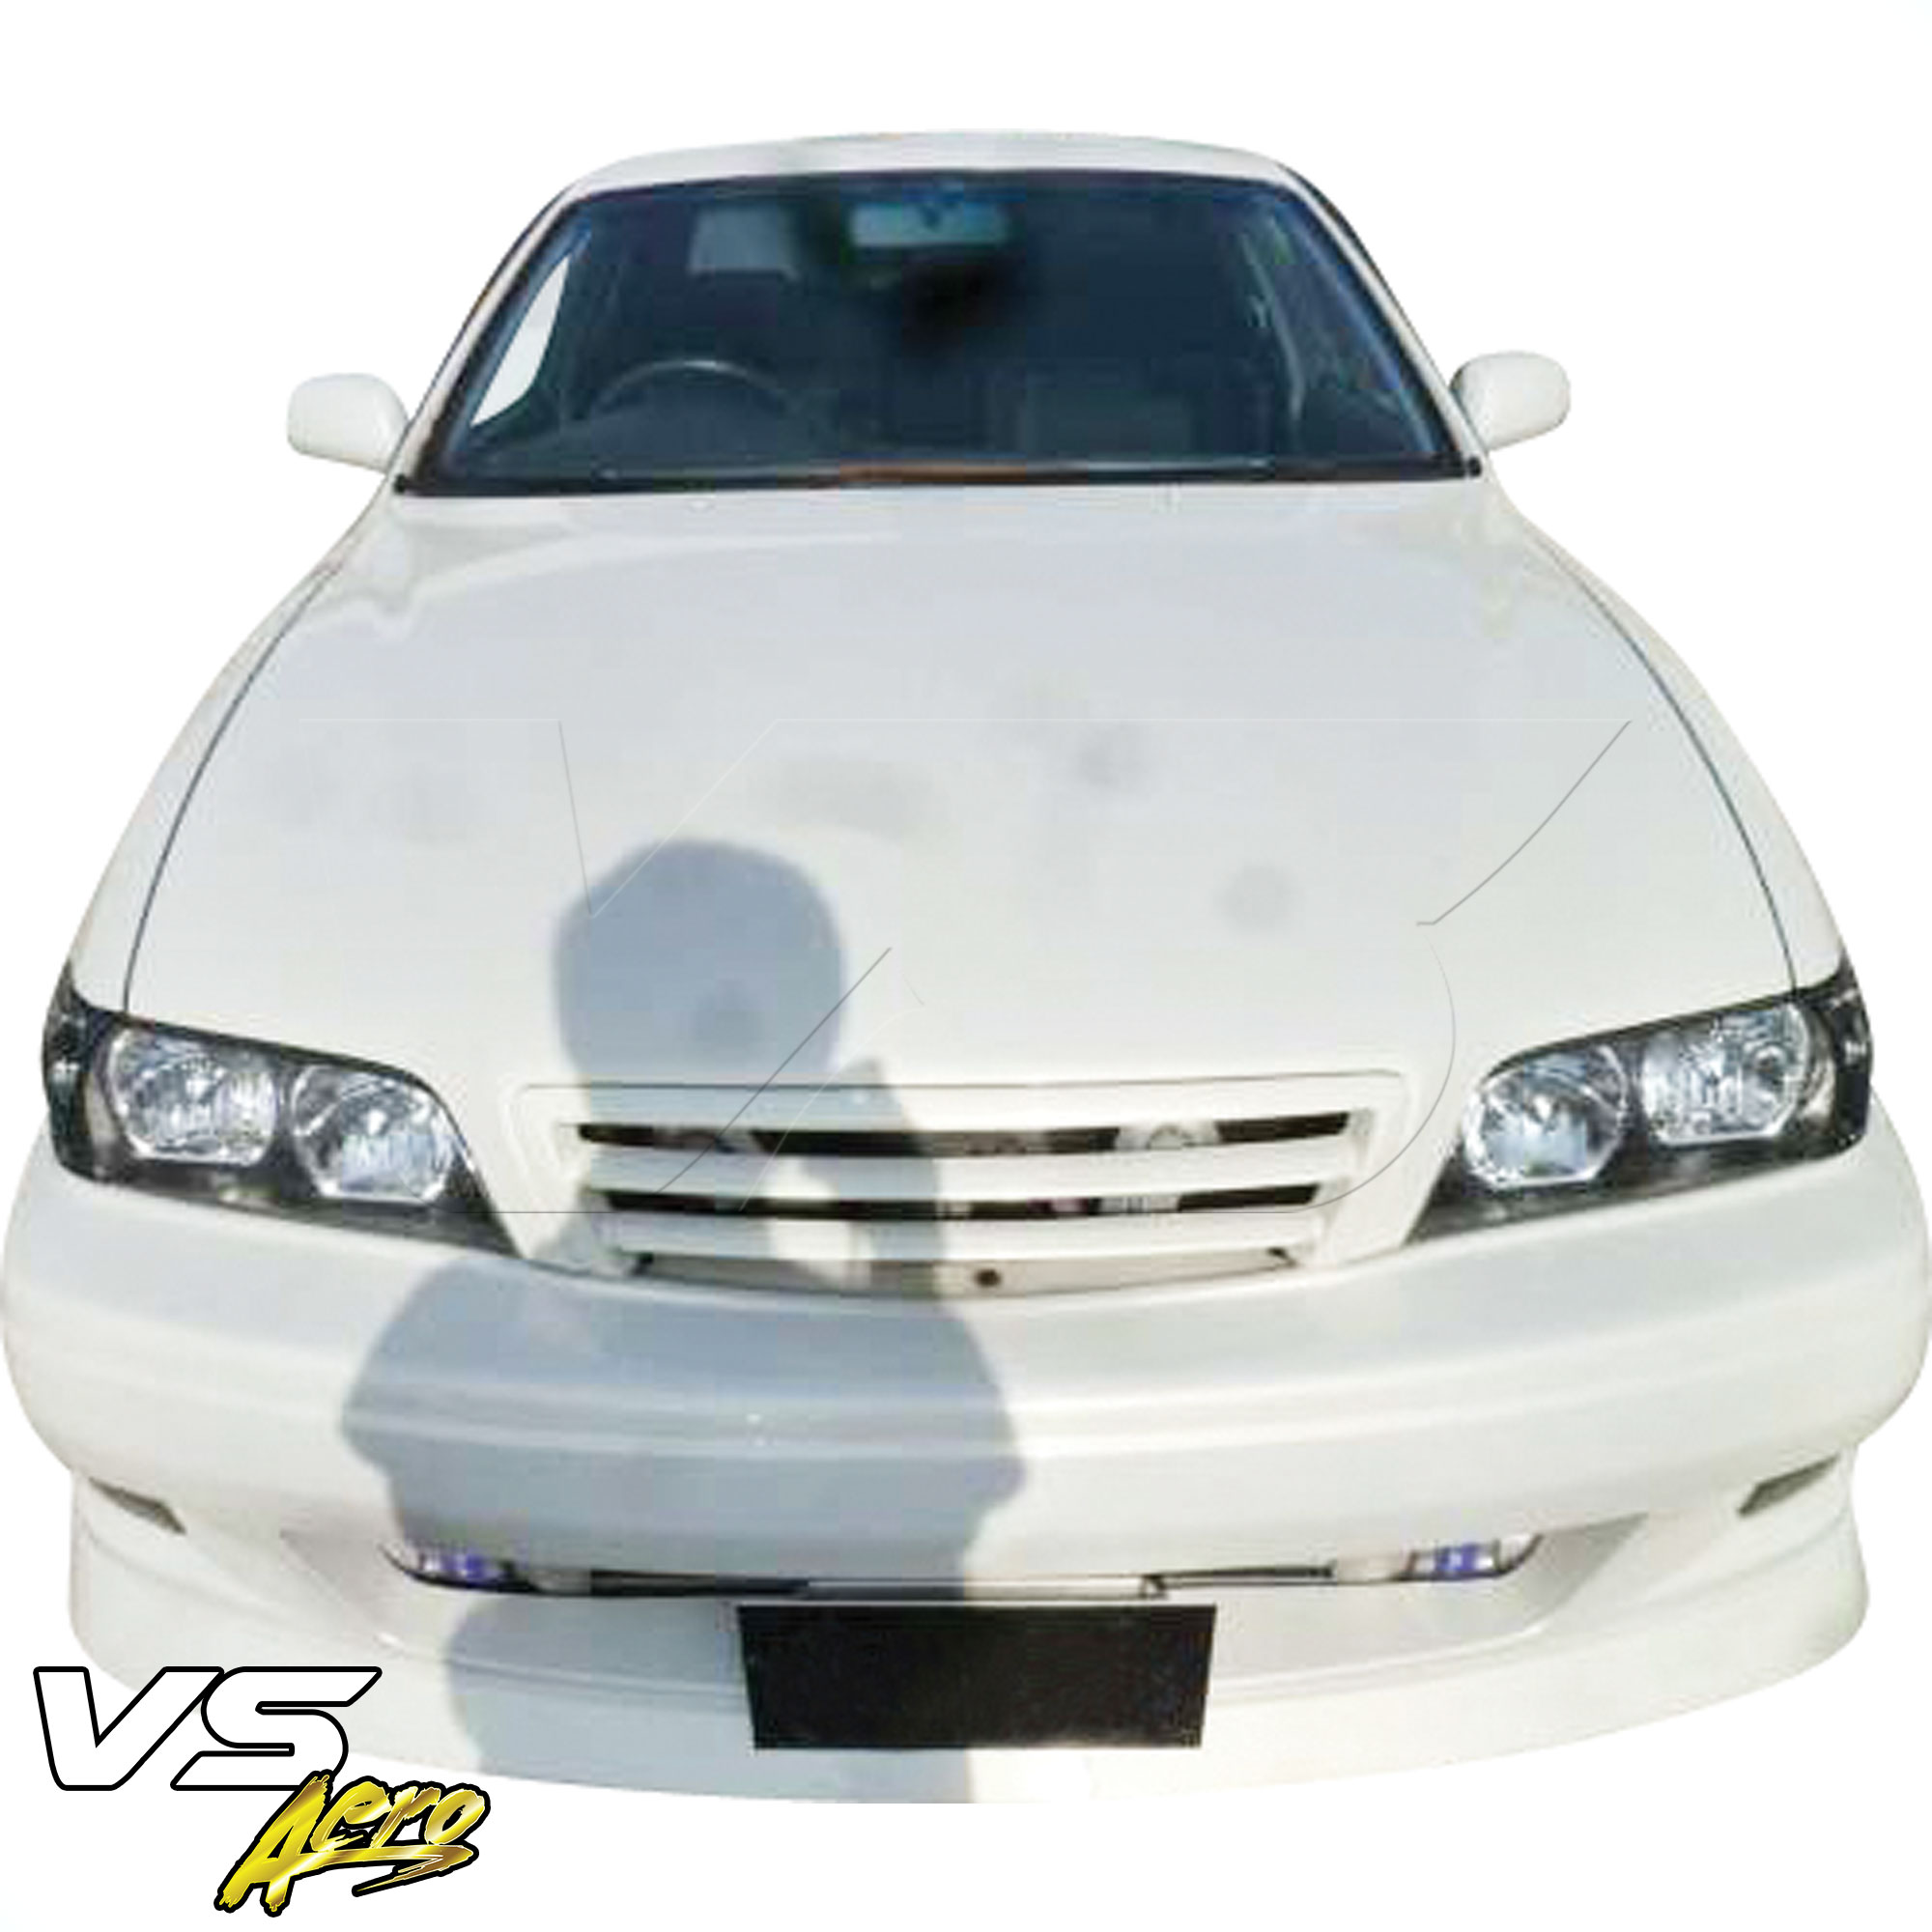 VSaero FRP URA vL Front Bumper > Toyota Chaser JZX100 1996-2000 - Image 5